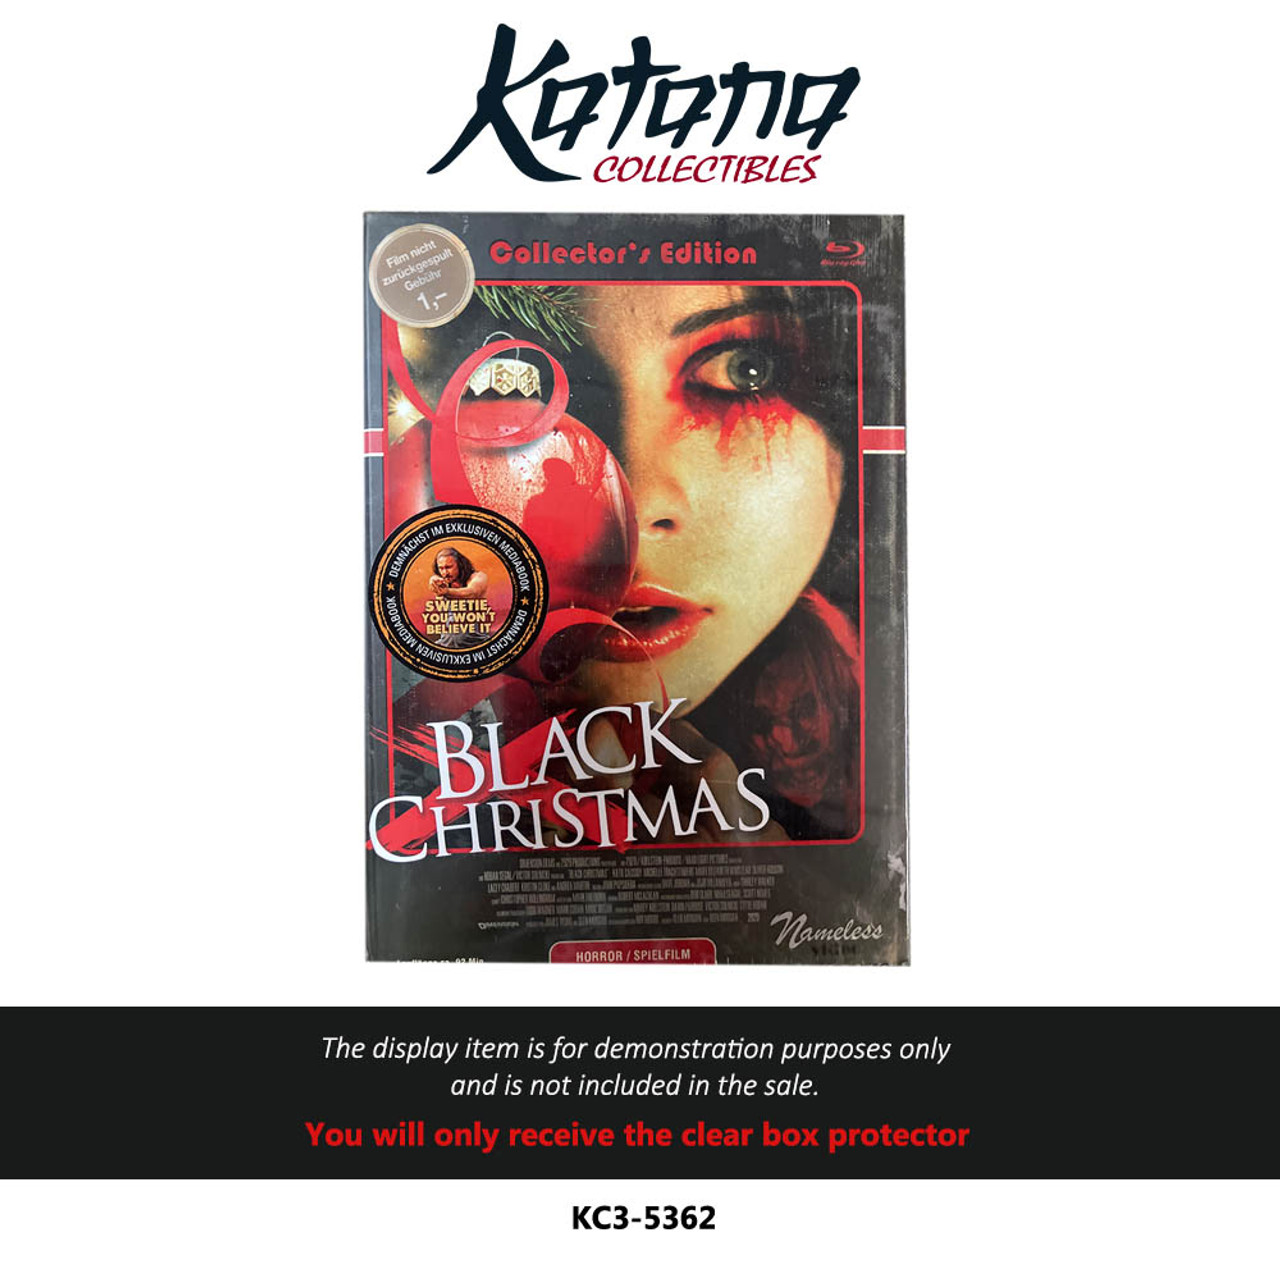 Katana Collectibles Protector For Black Christmas Collectors Edition Digibook Nameless Media